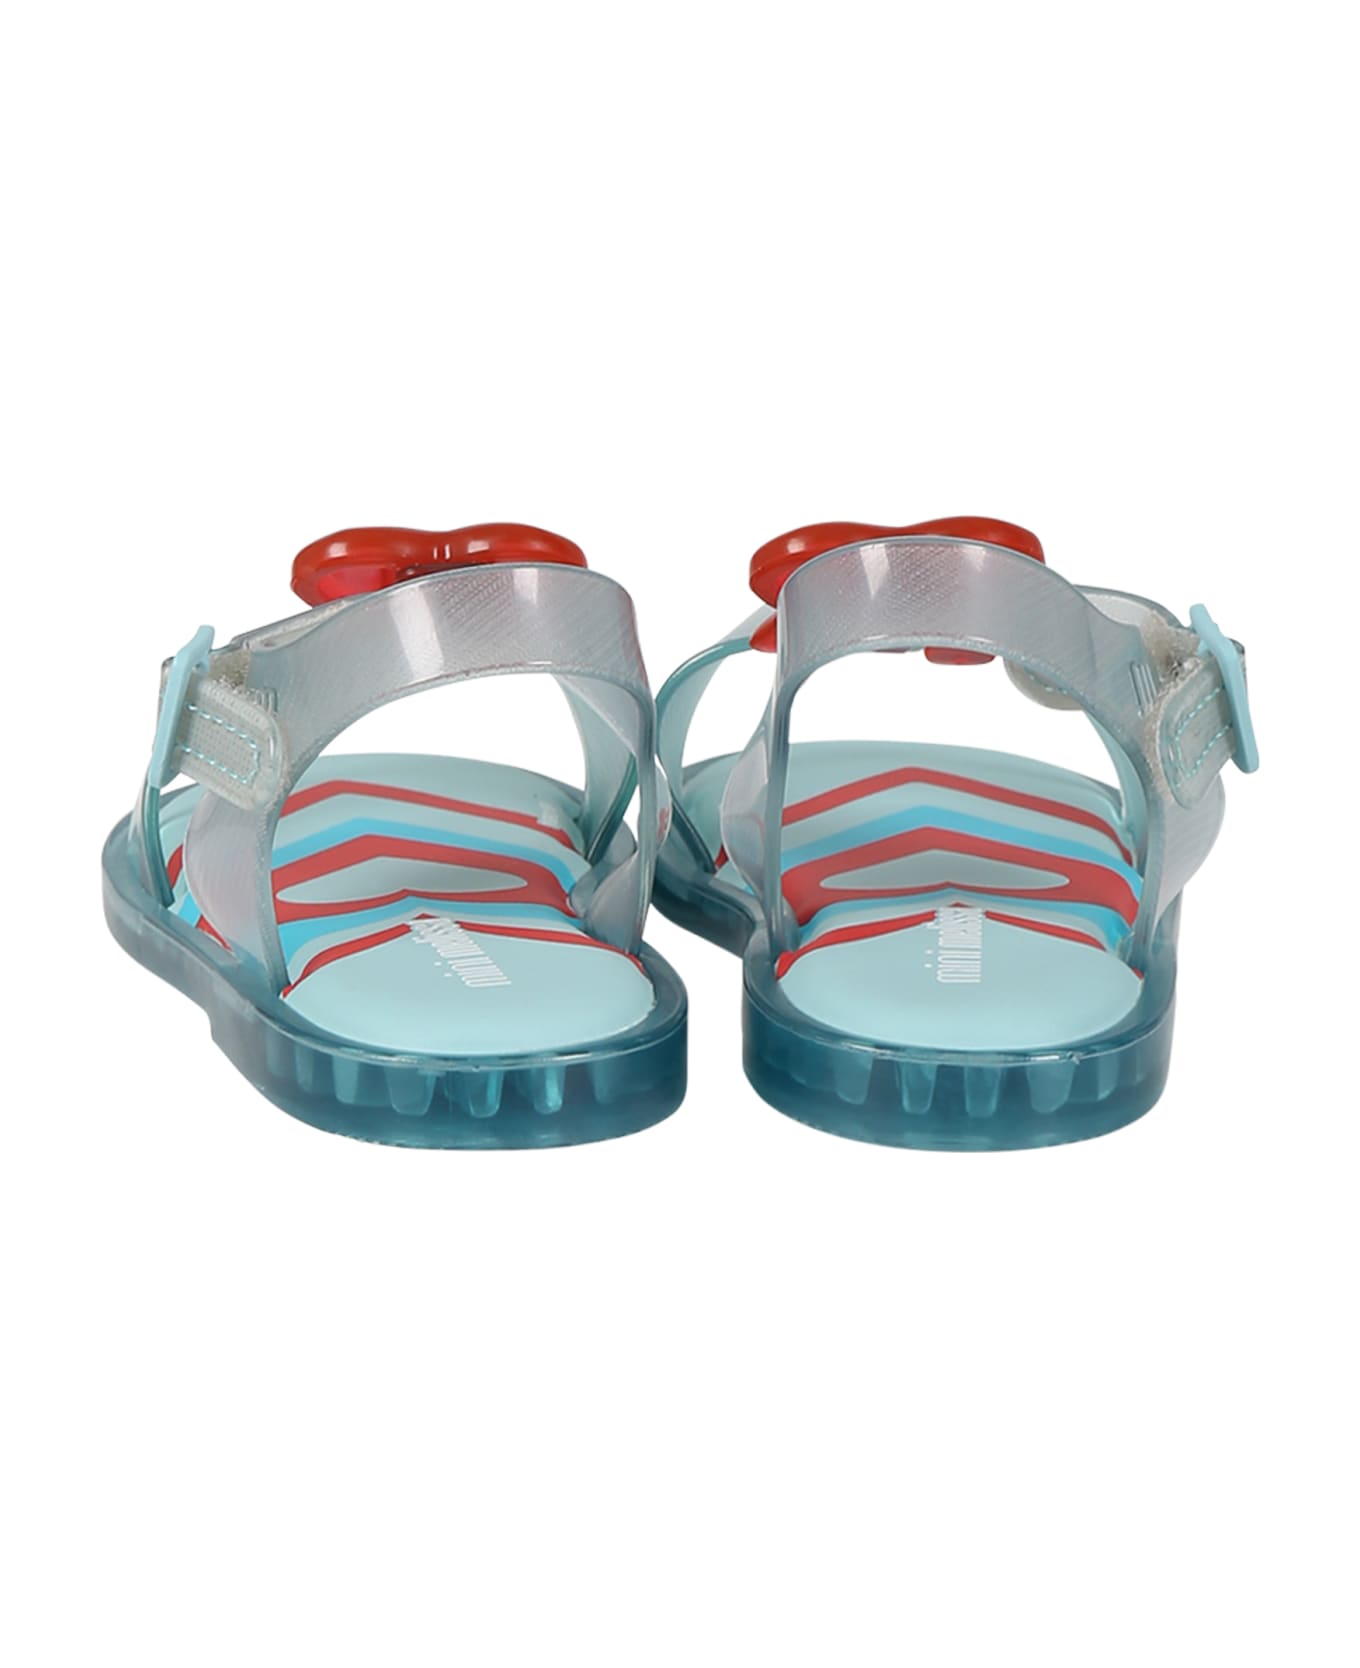 Melissa Multicolor Sandals For Girl With Lollipop - Transparent シューズ